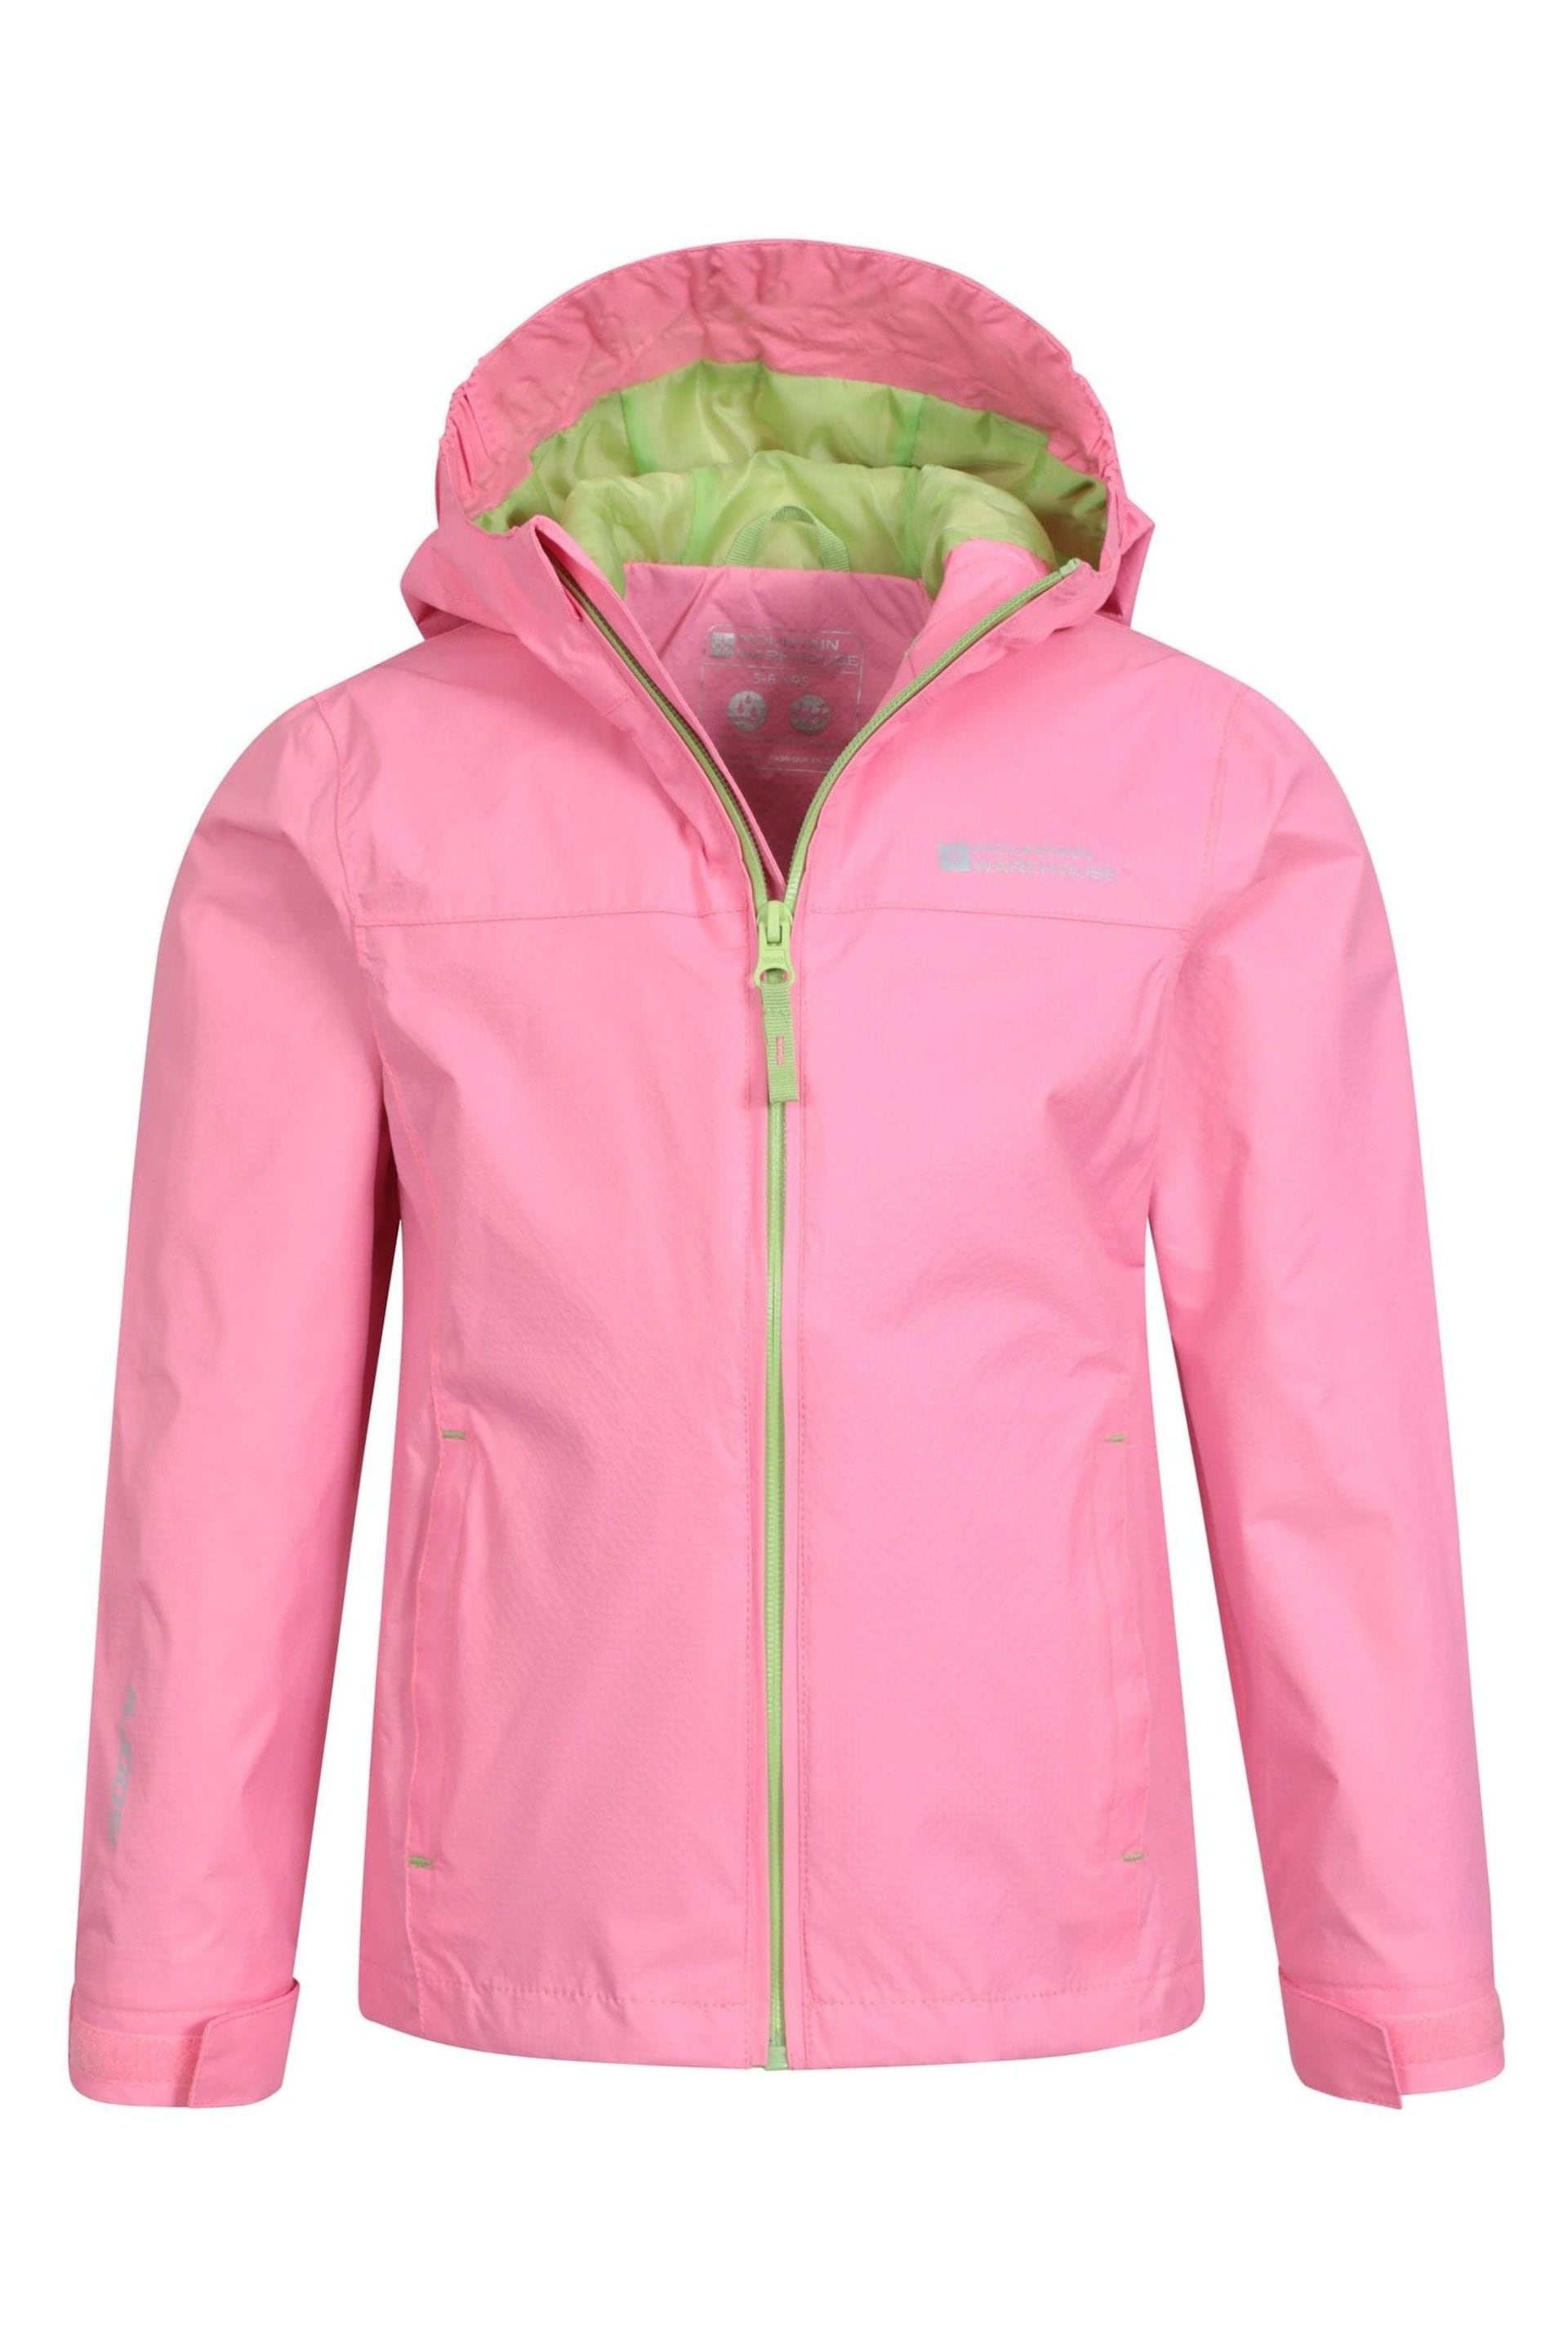 Mountain Warehouse Pink Torrent Waterproof Jacket - Image 5 of 5